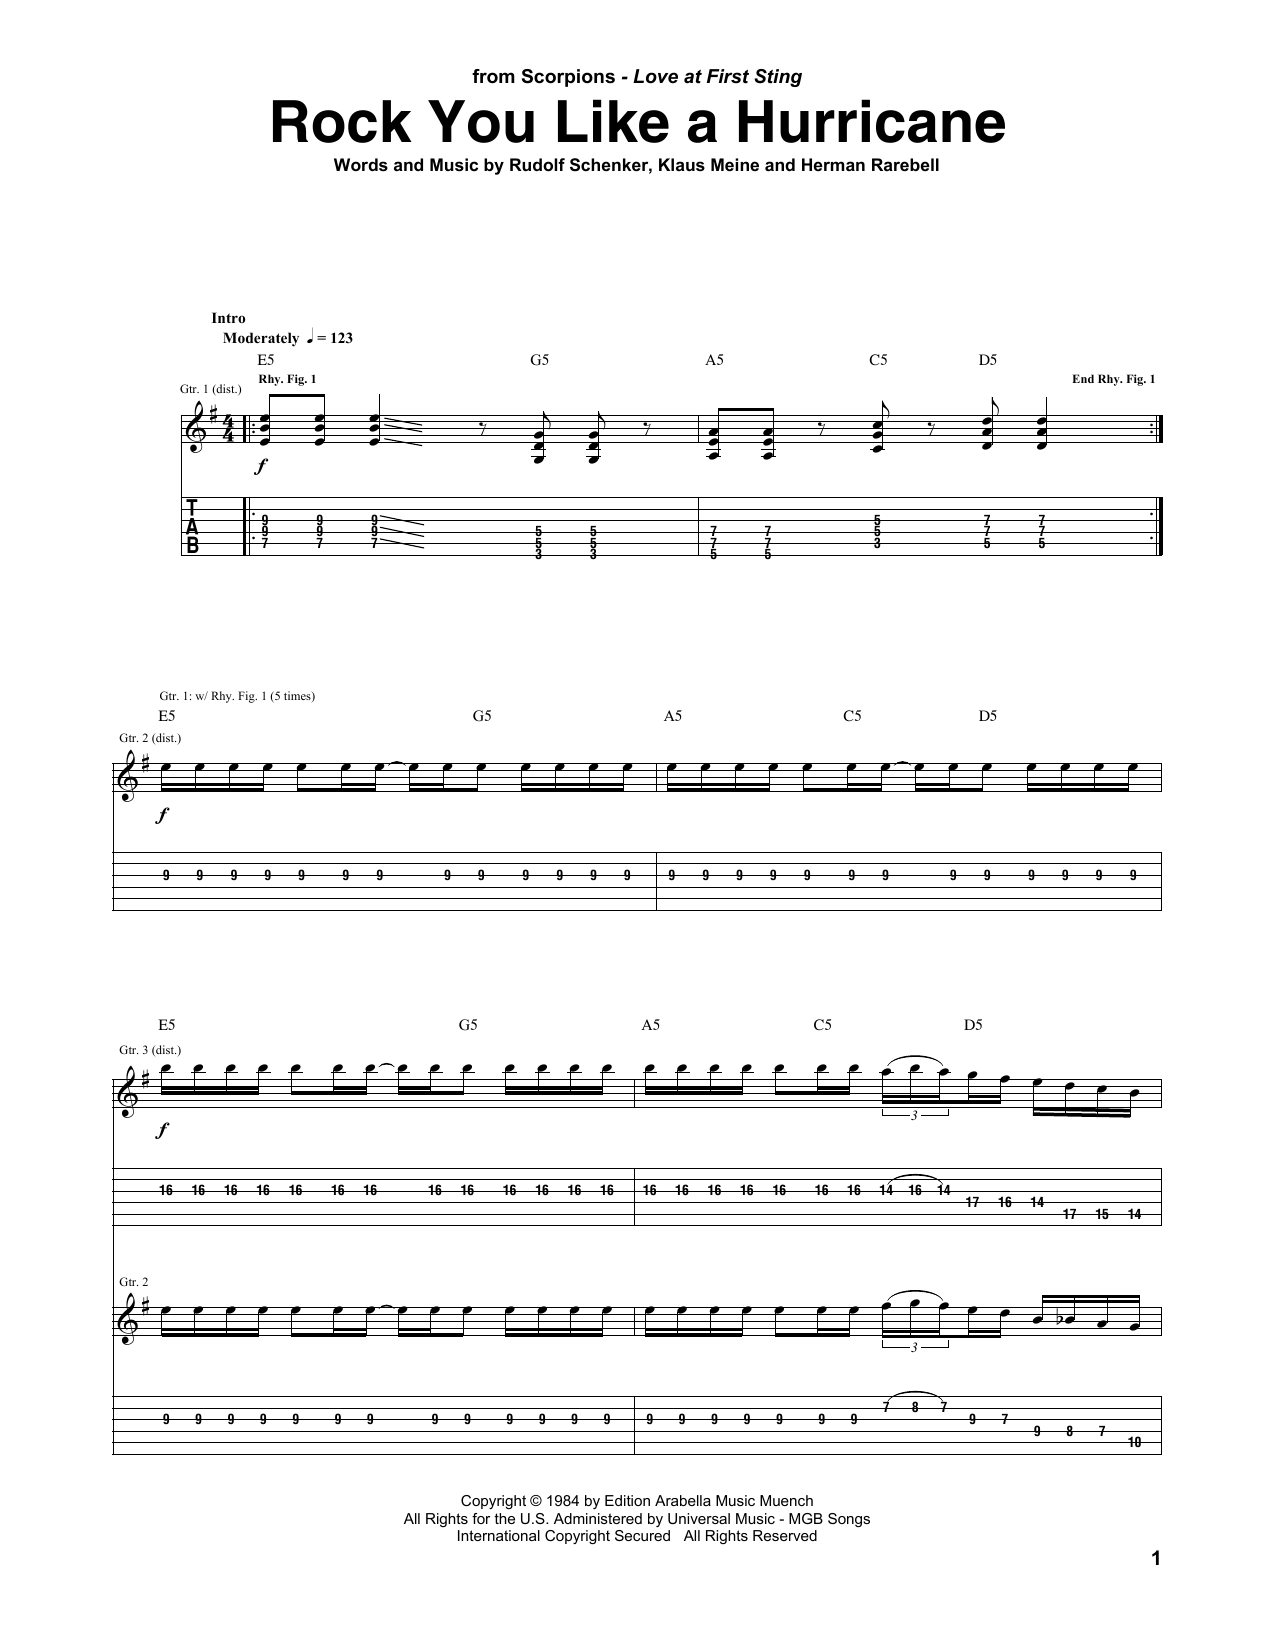 Scorpions Rock You Like A Hurricane Sheet Music Notes & Chords for Guitar Chords/Lyrics - Download or Print PDF